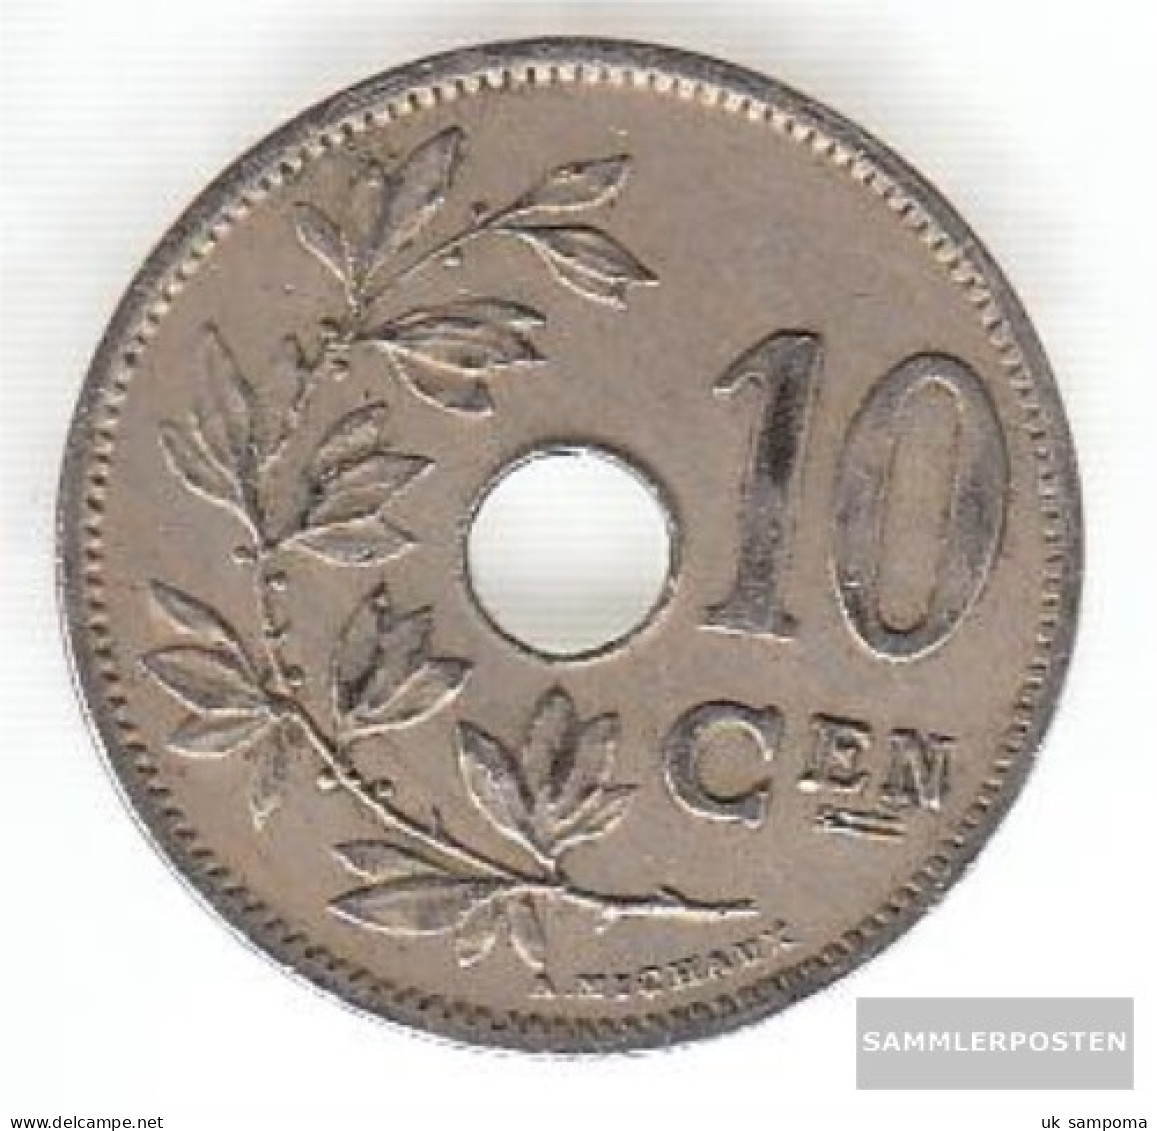 Belgium Km-number. : 49 1902 Very Fine Copper-Nickel Very Fine 1902 10 Centimes Gekröntes Monogram - 10 Cents